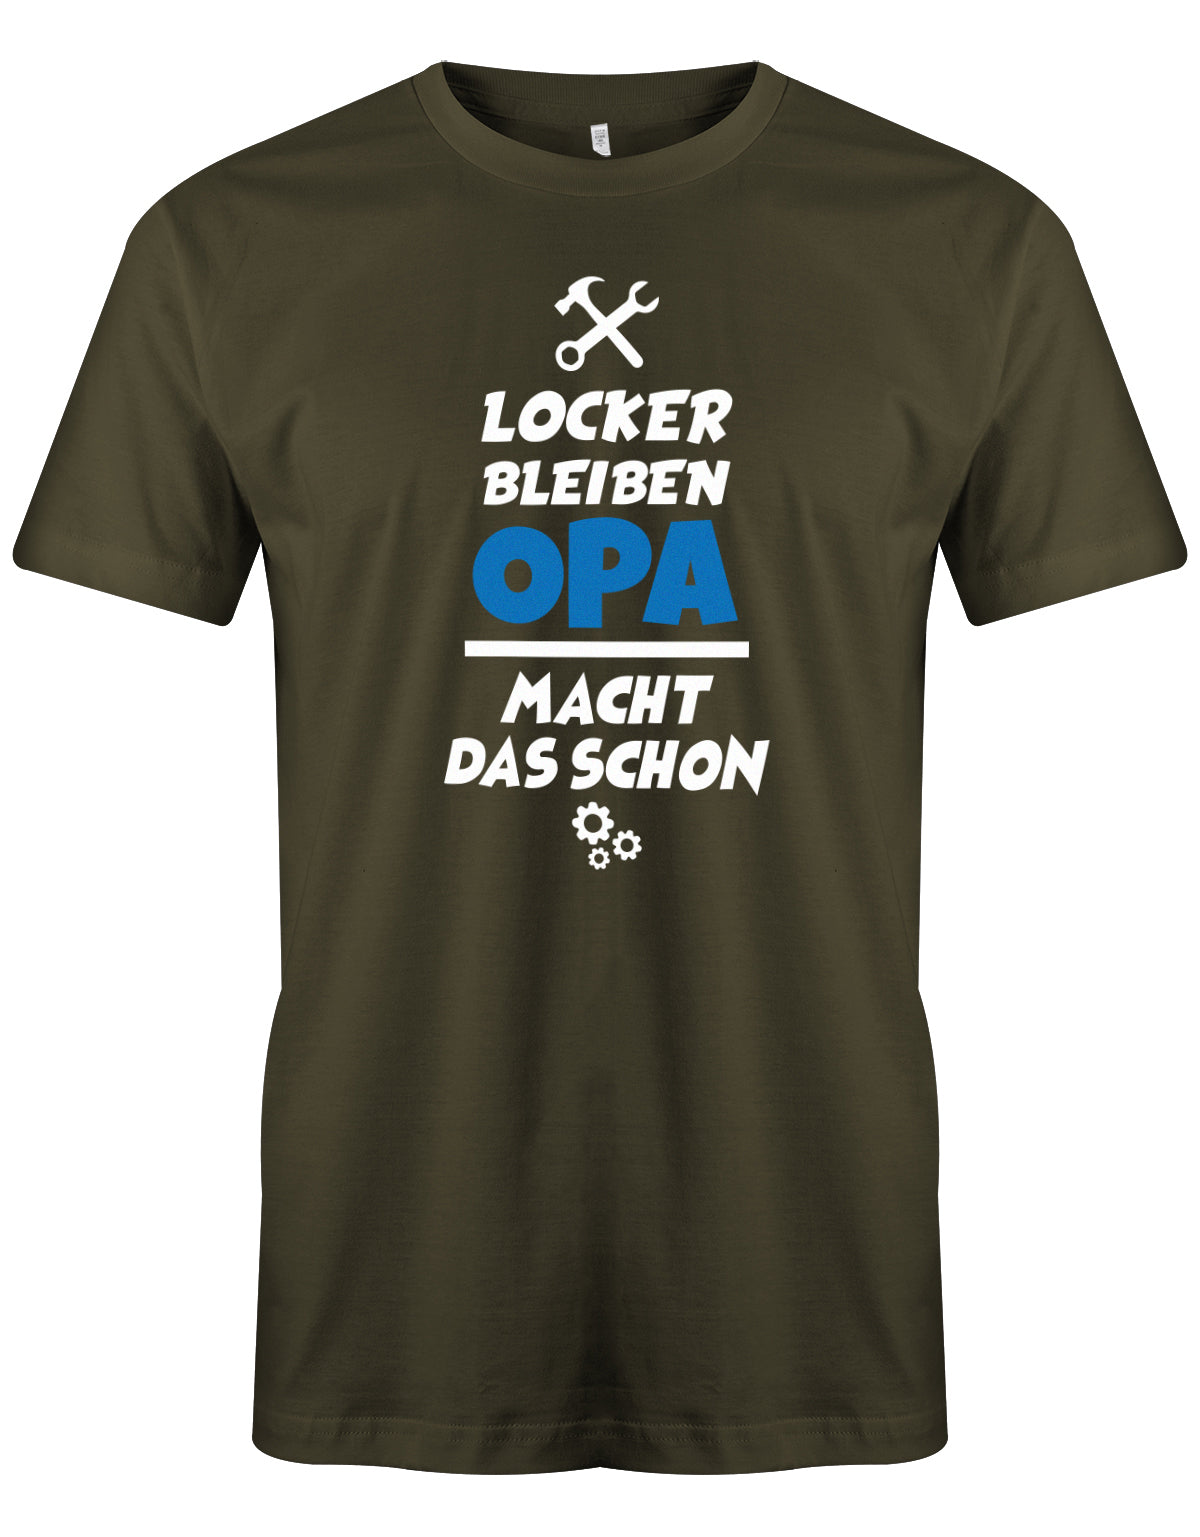 Opa T-Shirt – Locker bleiben, der Opa macht das schon. Army